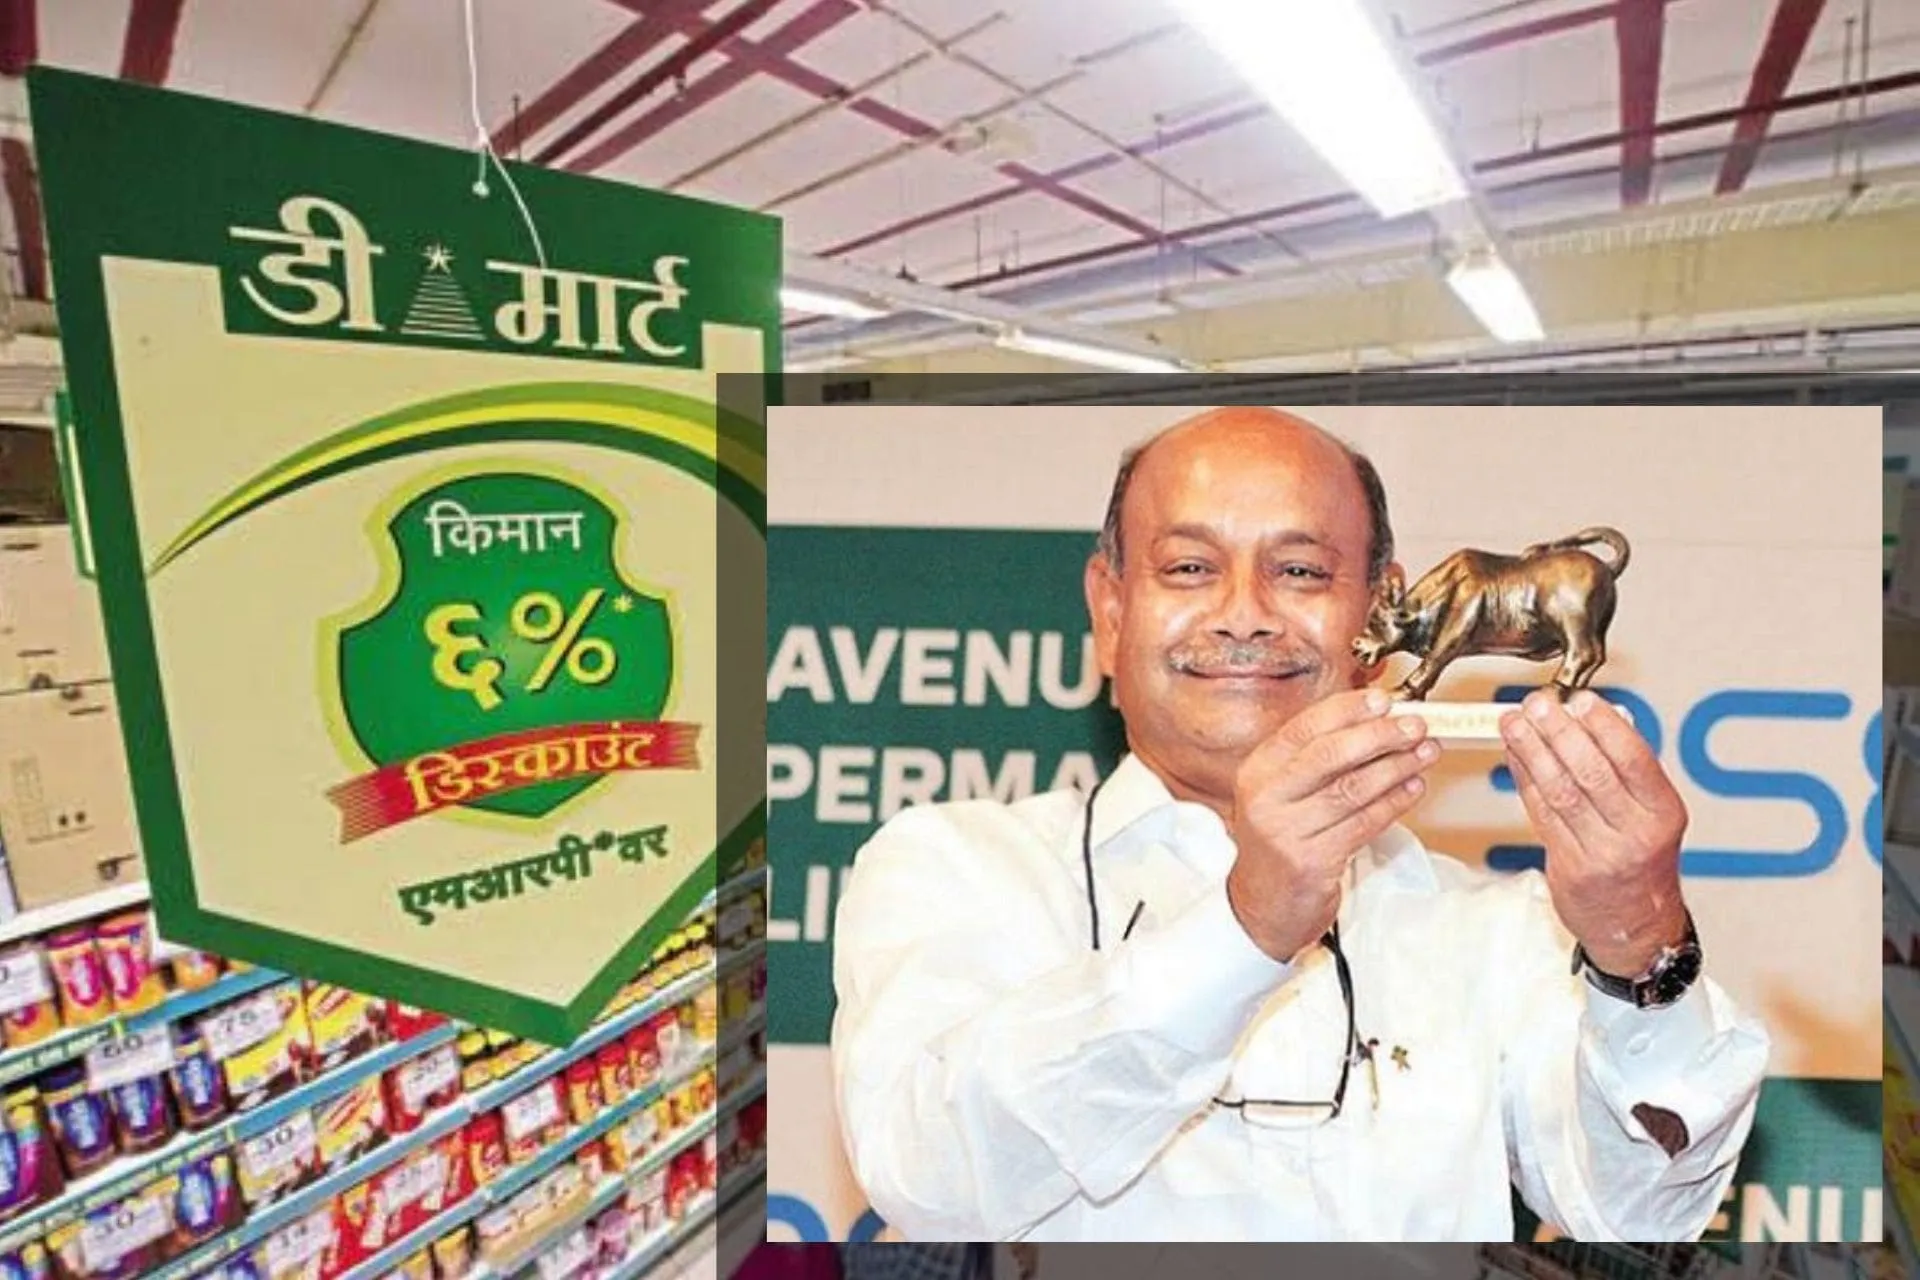 The King of Retail Industry: Radhakishan Damani